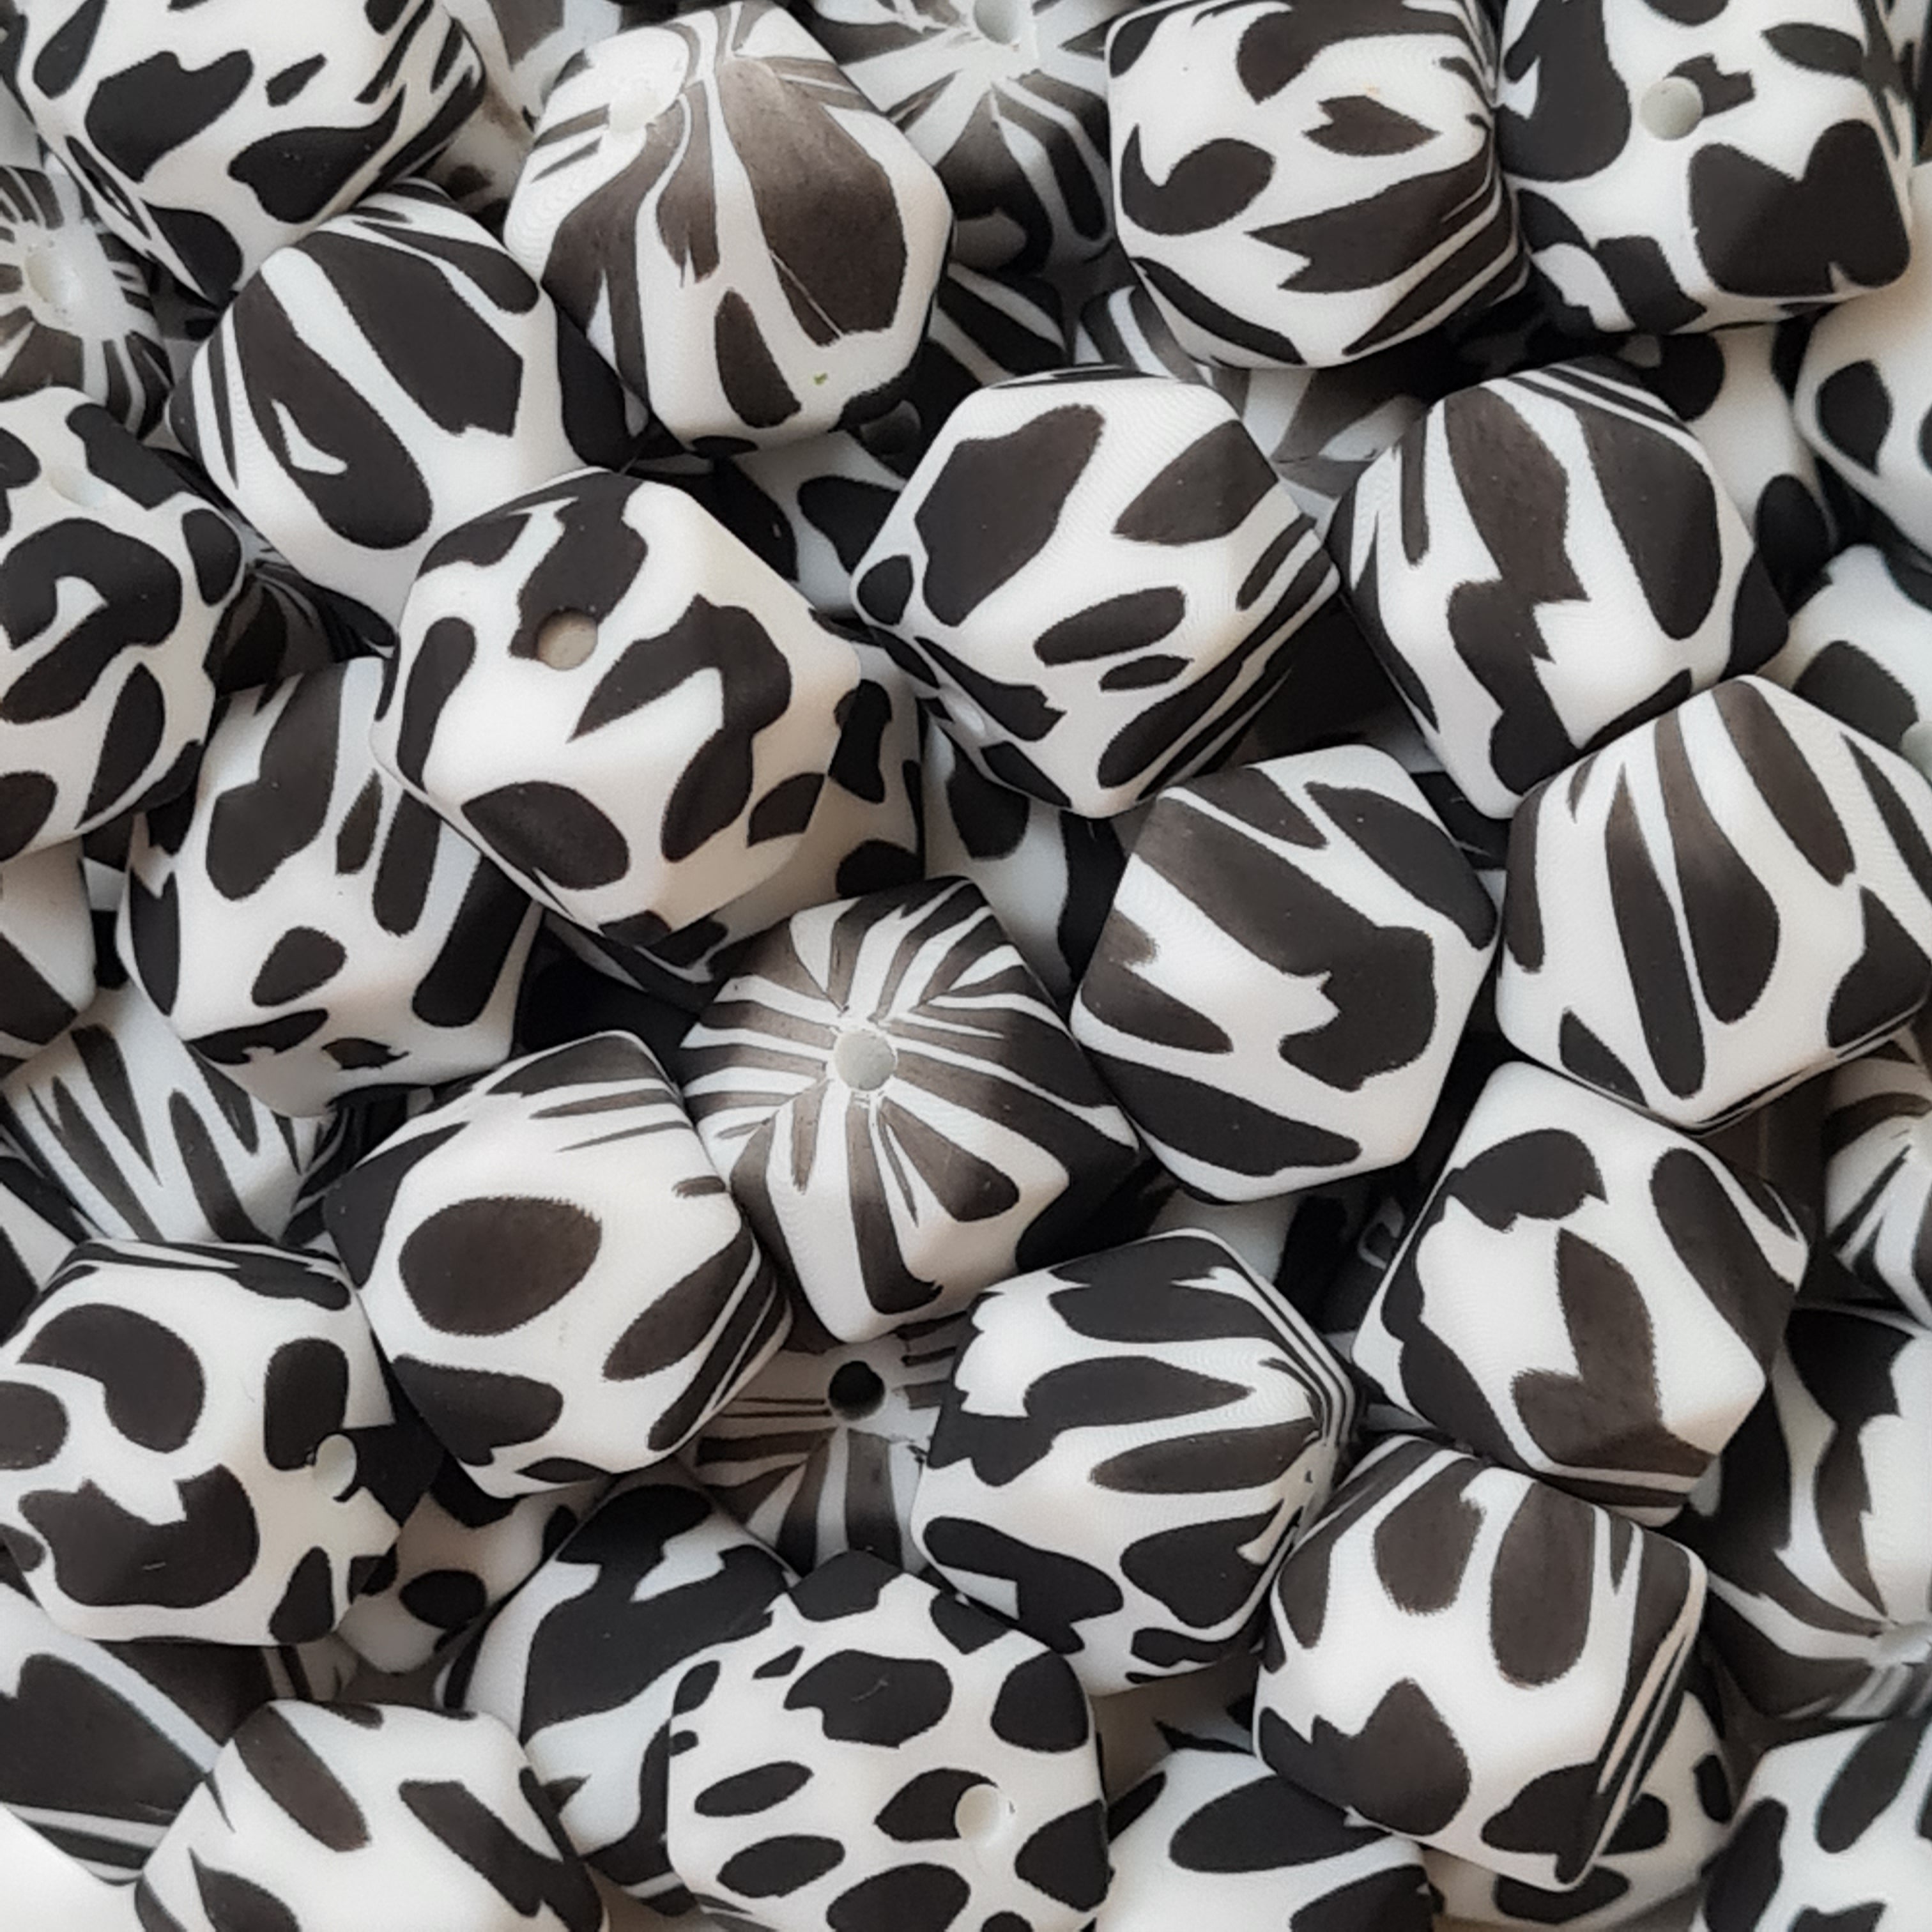 Printed 14mm hexagon beads